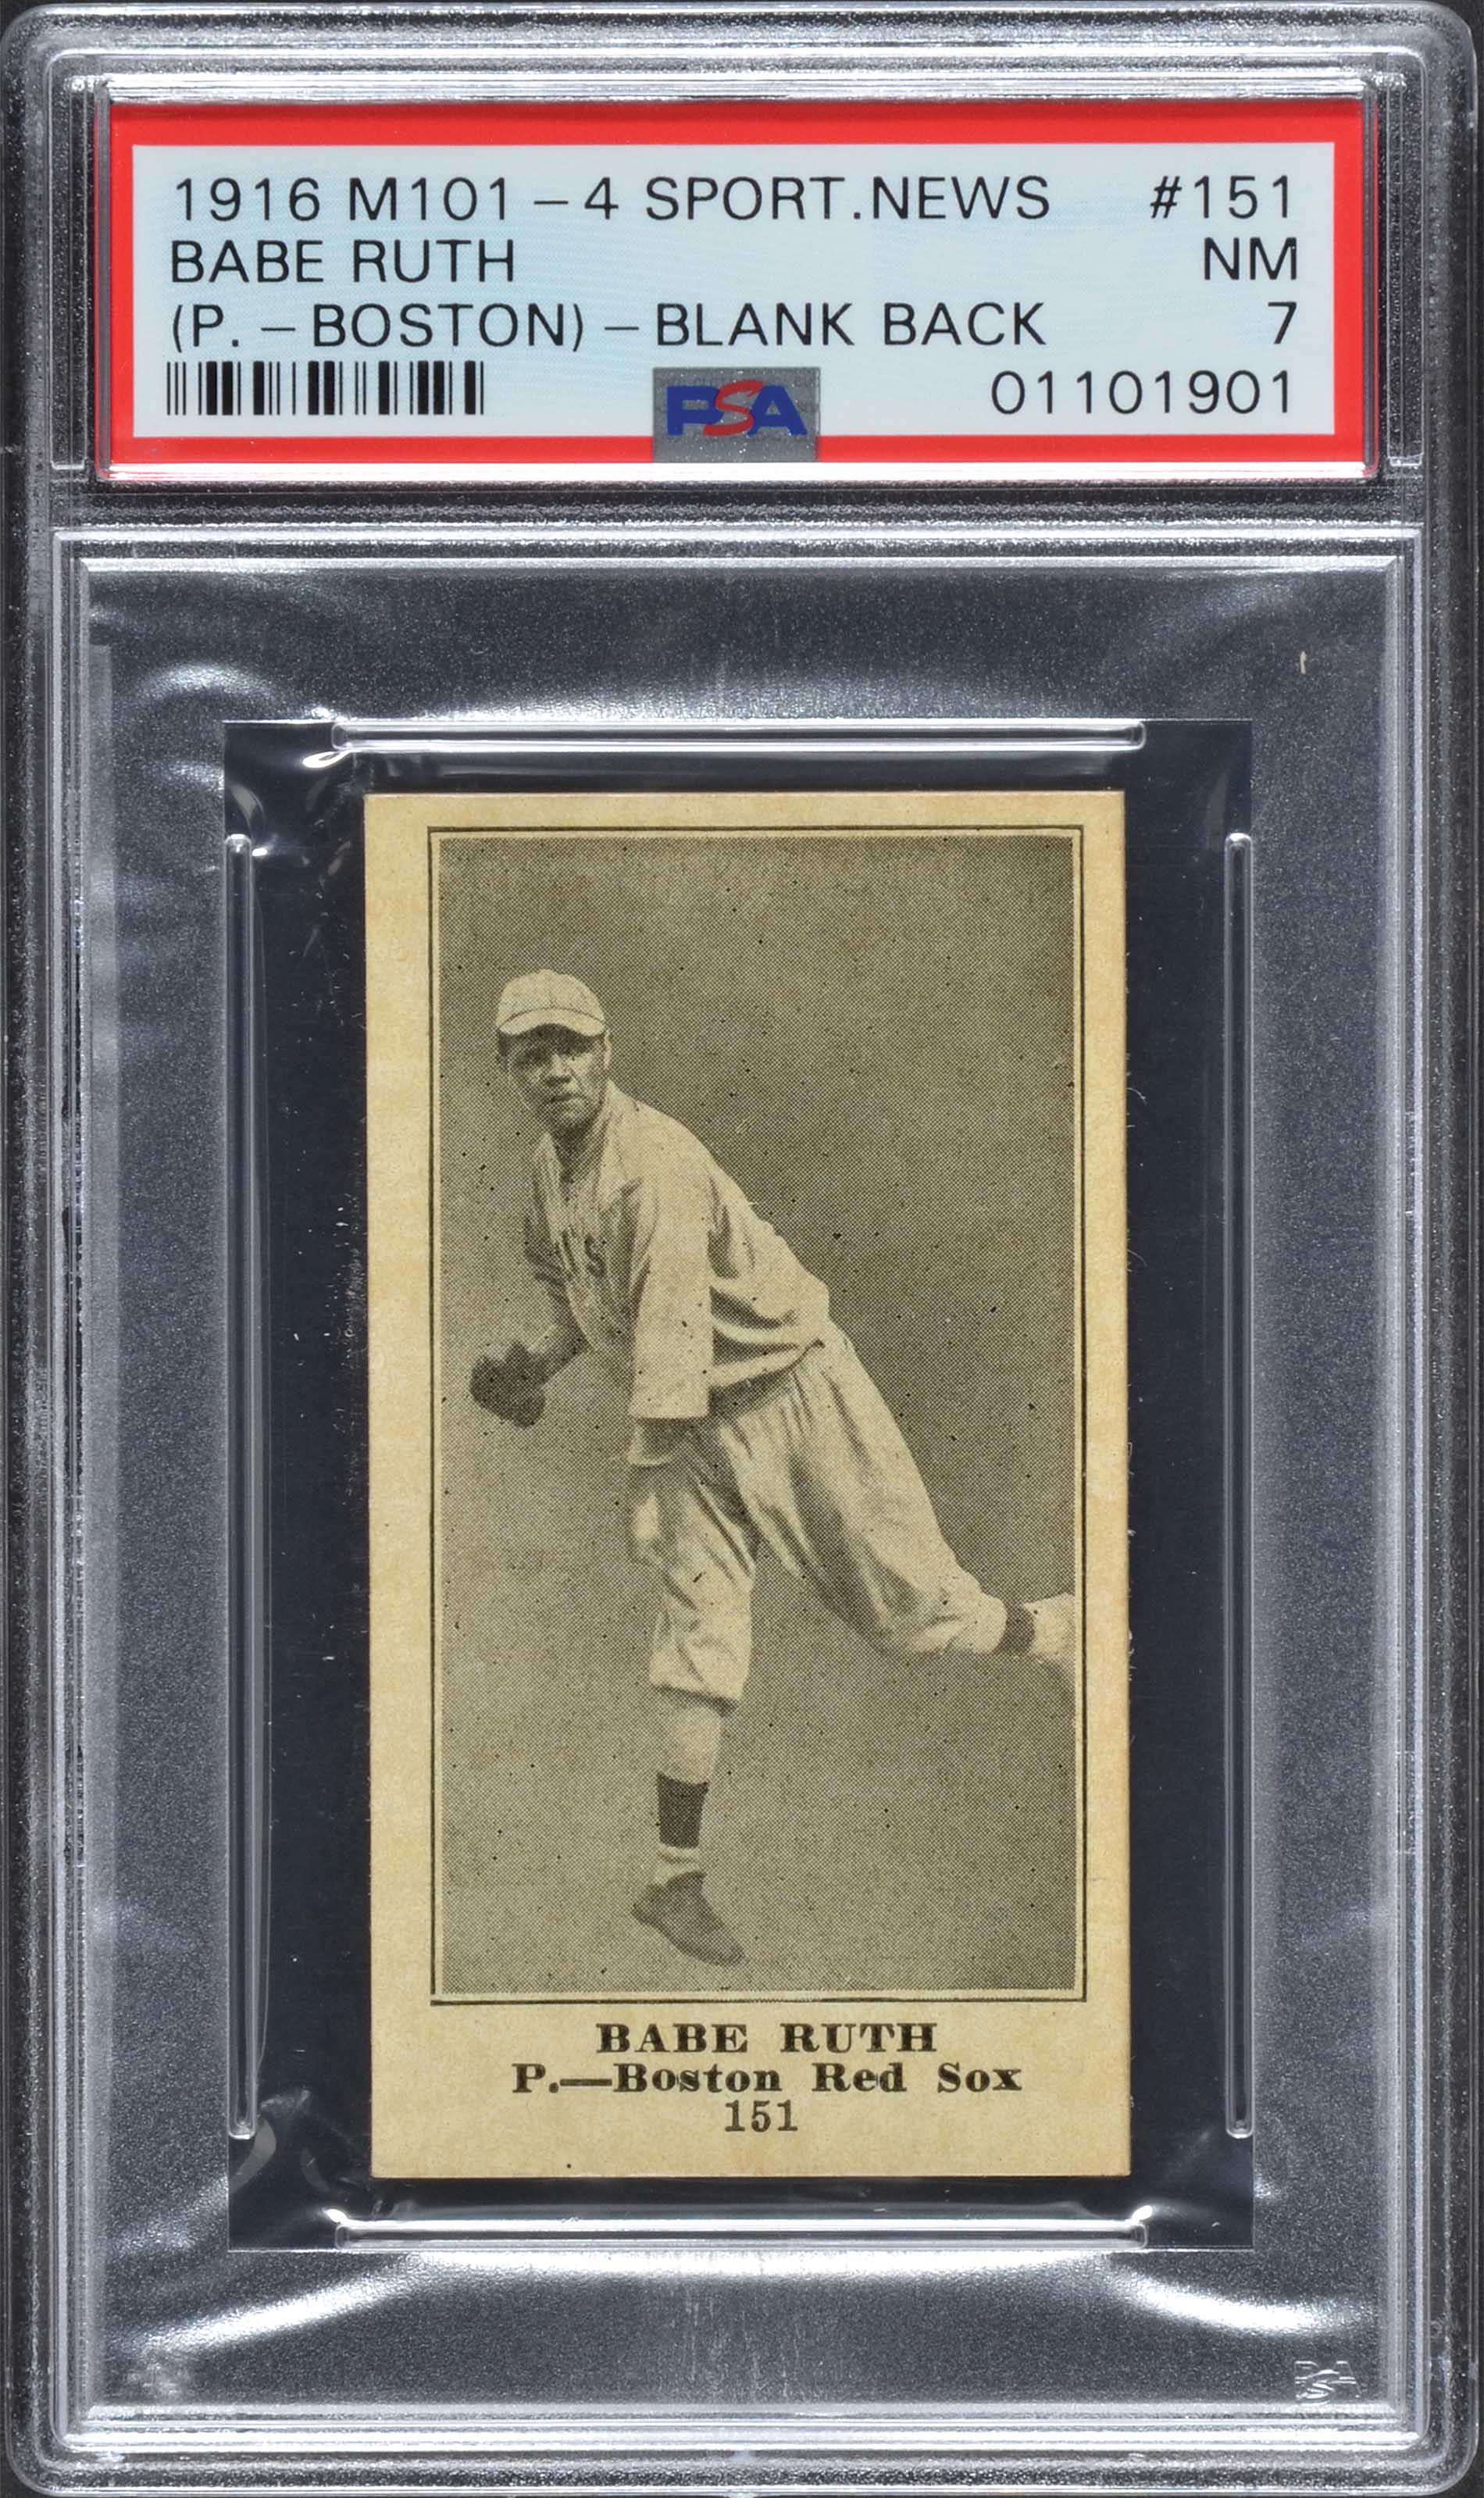 1916 Babe Ruth rookie card PSA 7 near mint